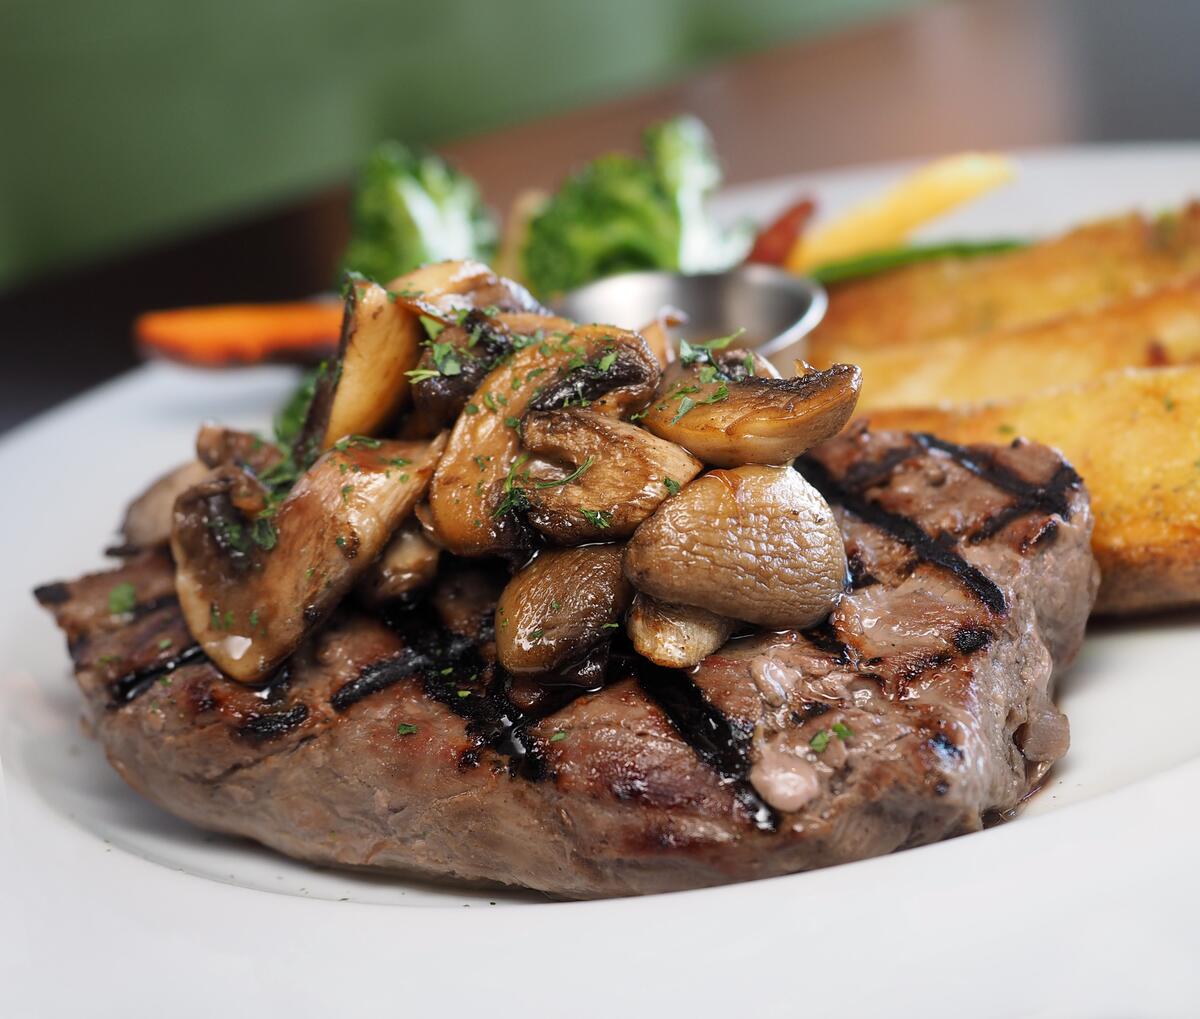 Delicious steak with mushrooms